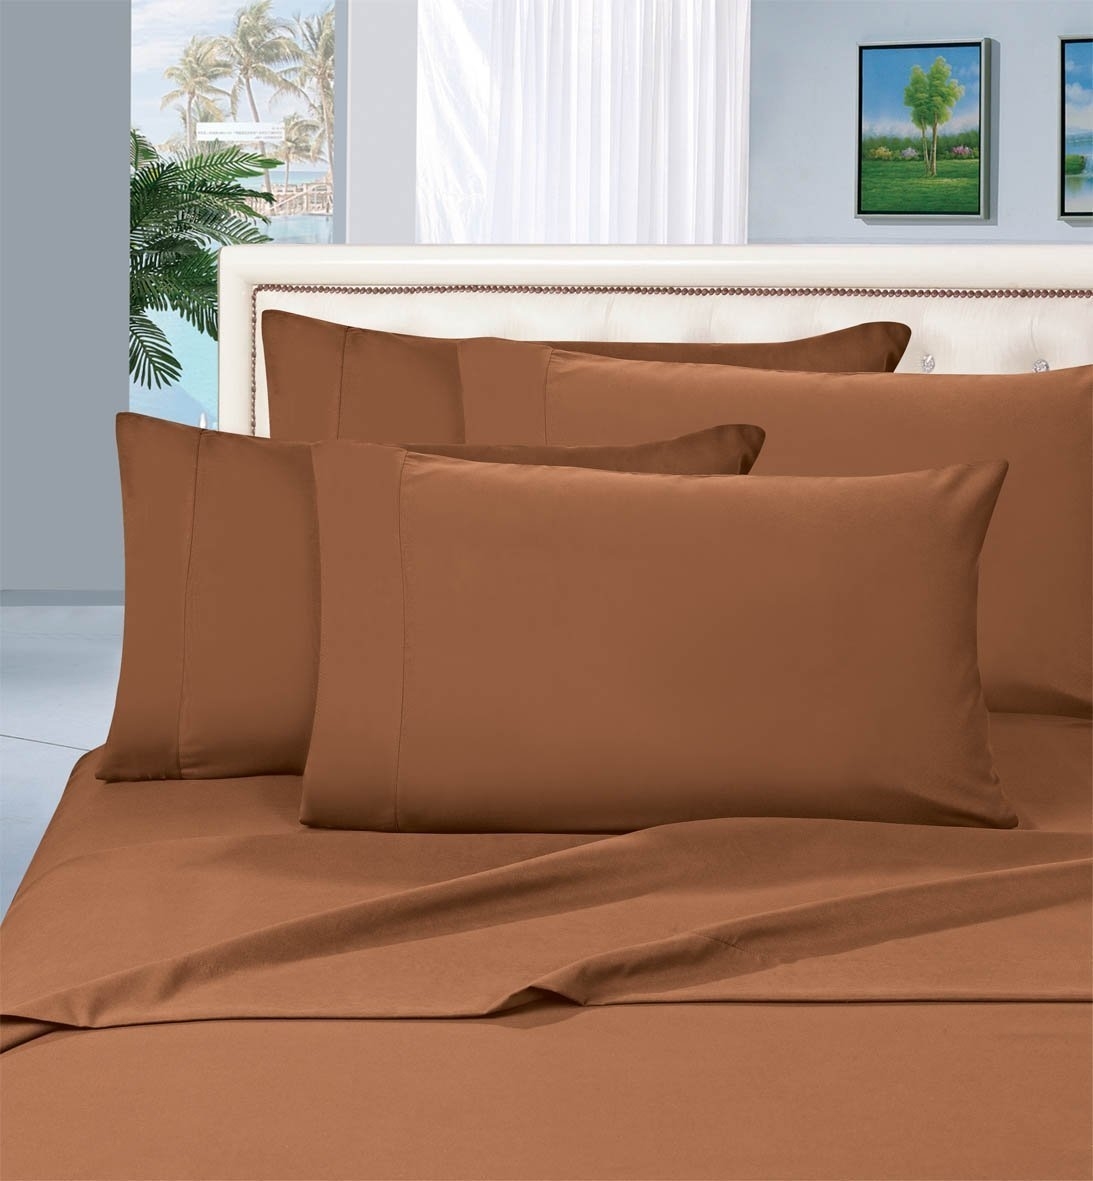 Elegant Comfort 1500 Series Wrinkle Resistant Egyptian Quality Hypoallergenic Ultra Soft Luxury 4-piece Bed Sheet Set, Queen, Bronze